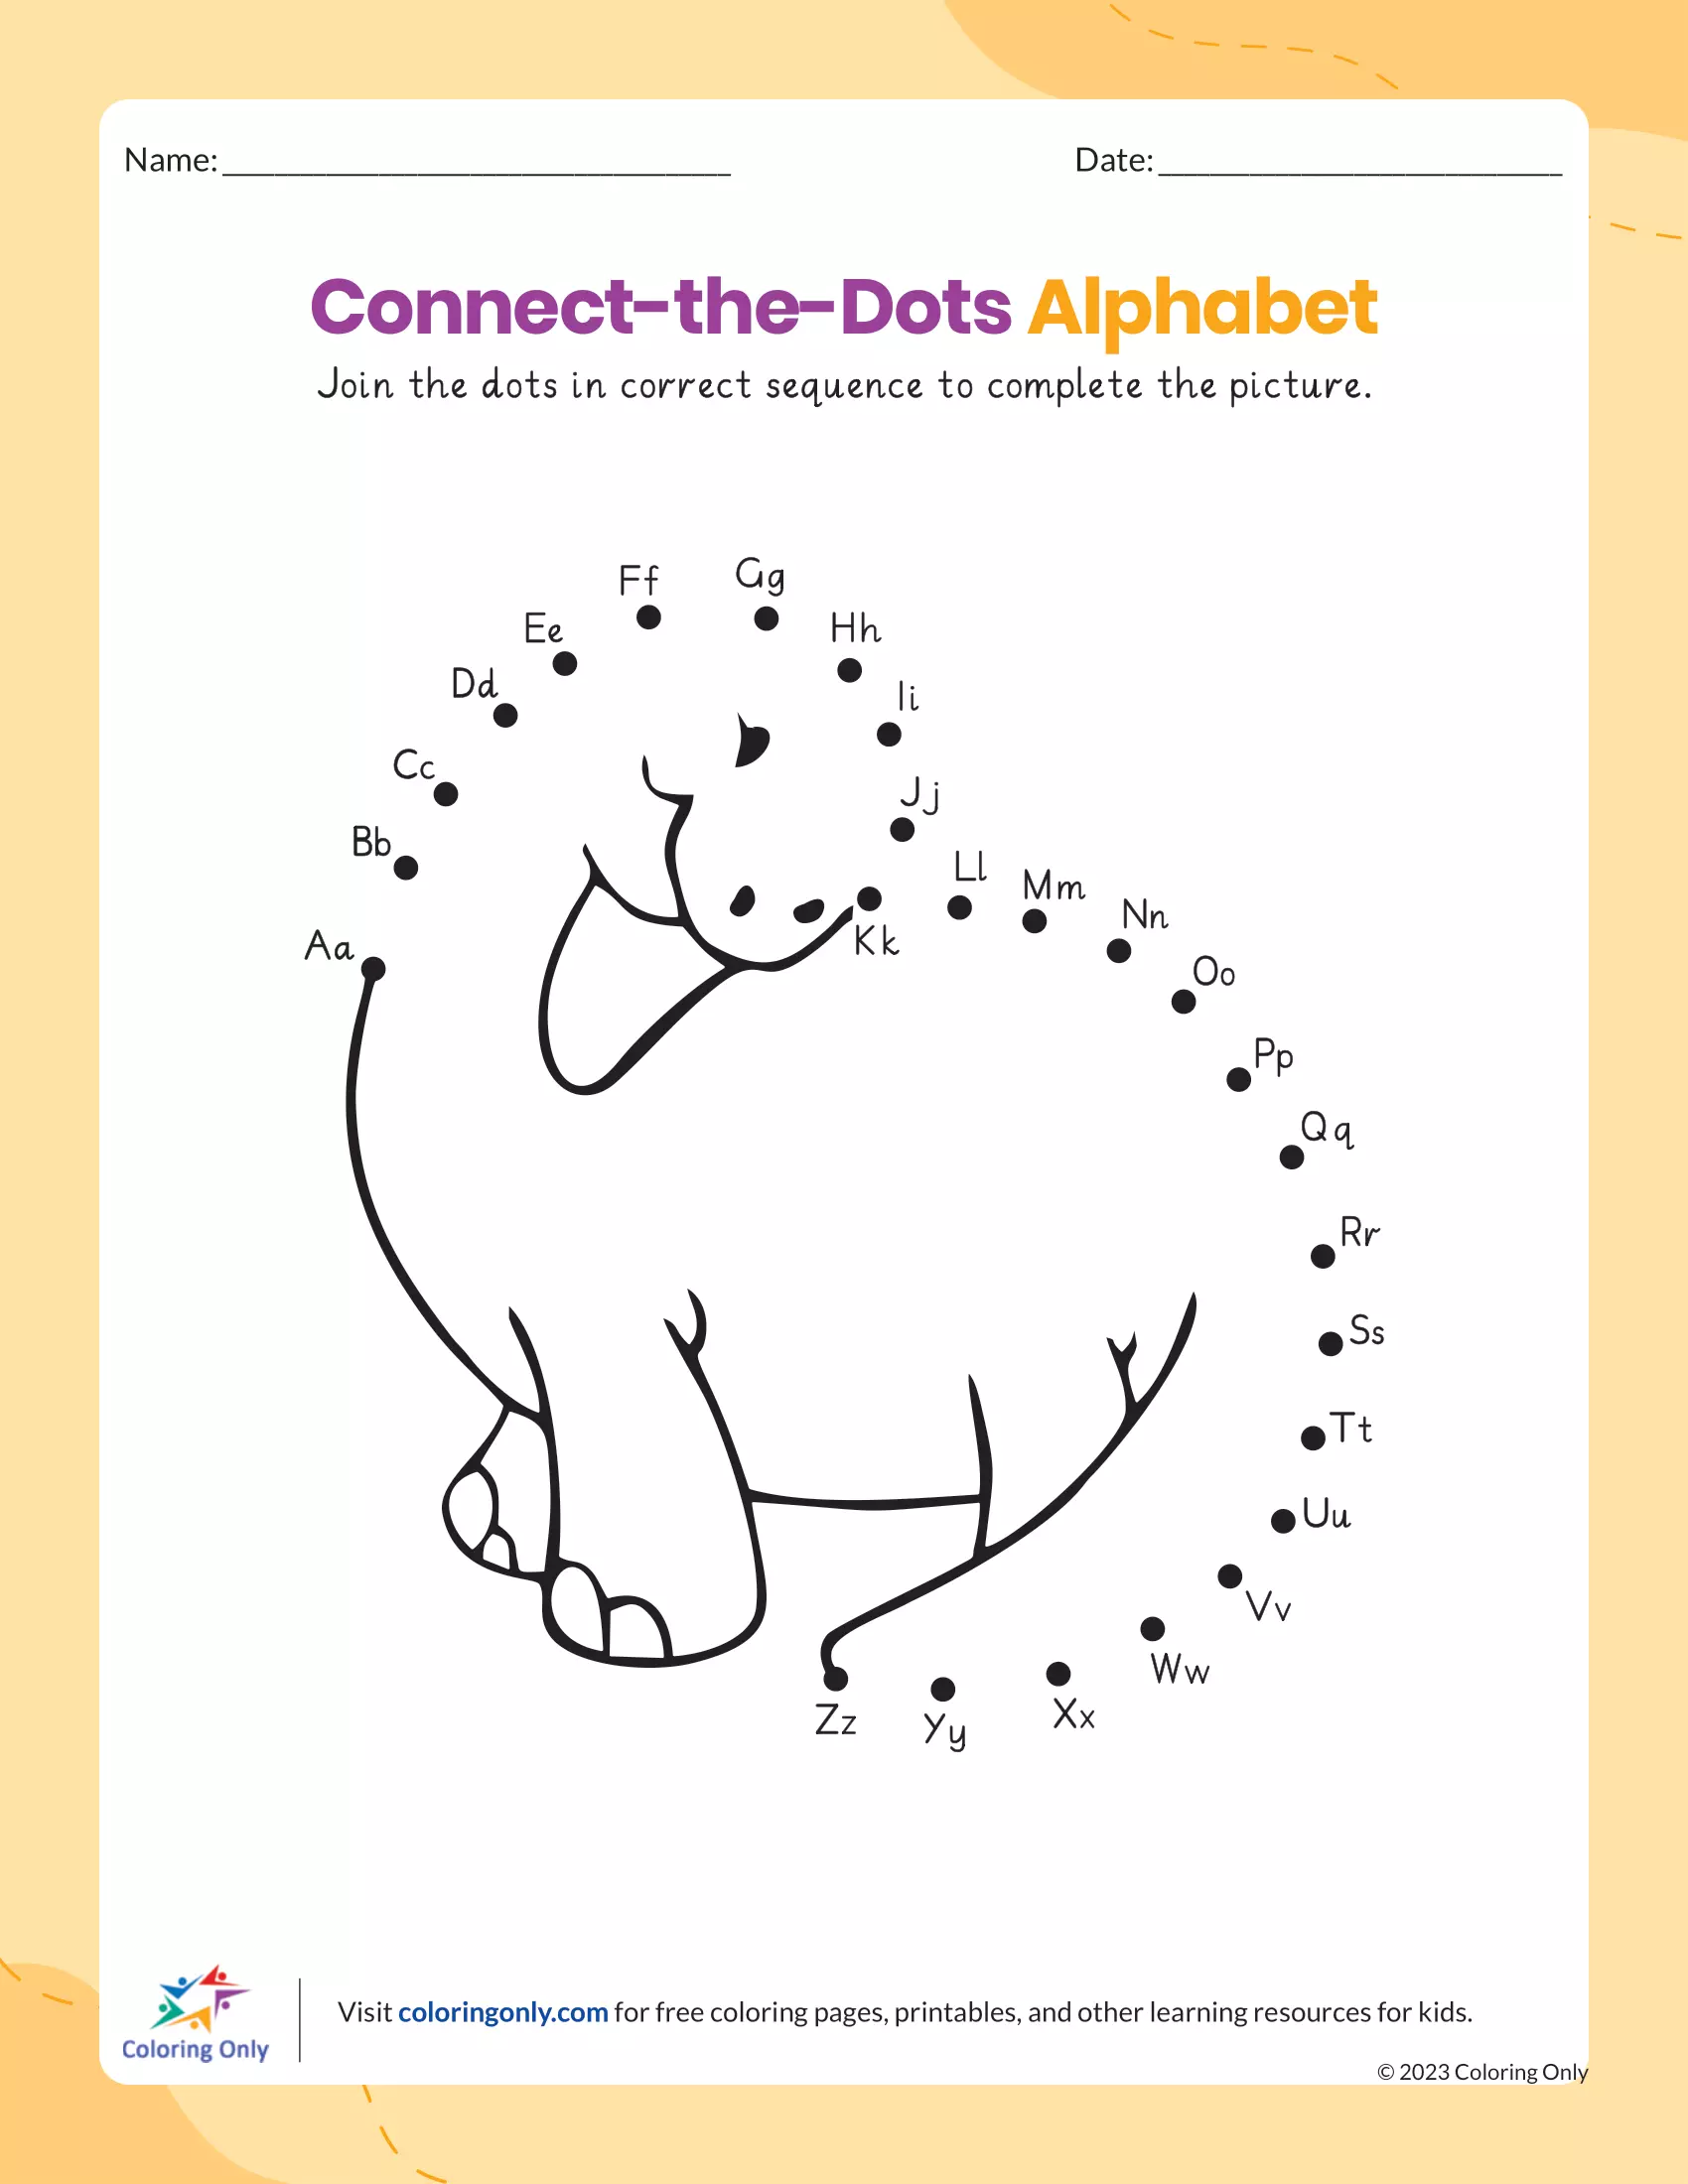 Dinosaur Alphabet Connect-the-Dots